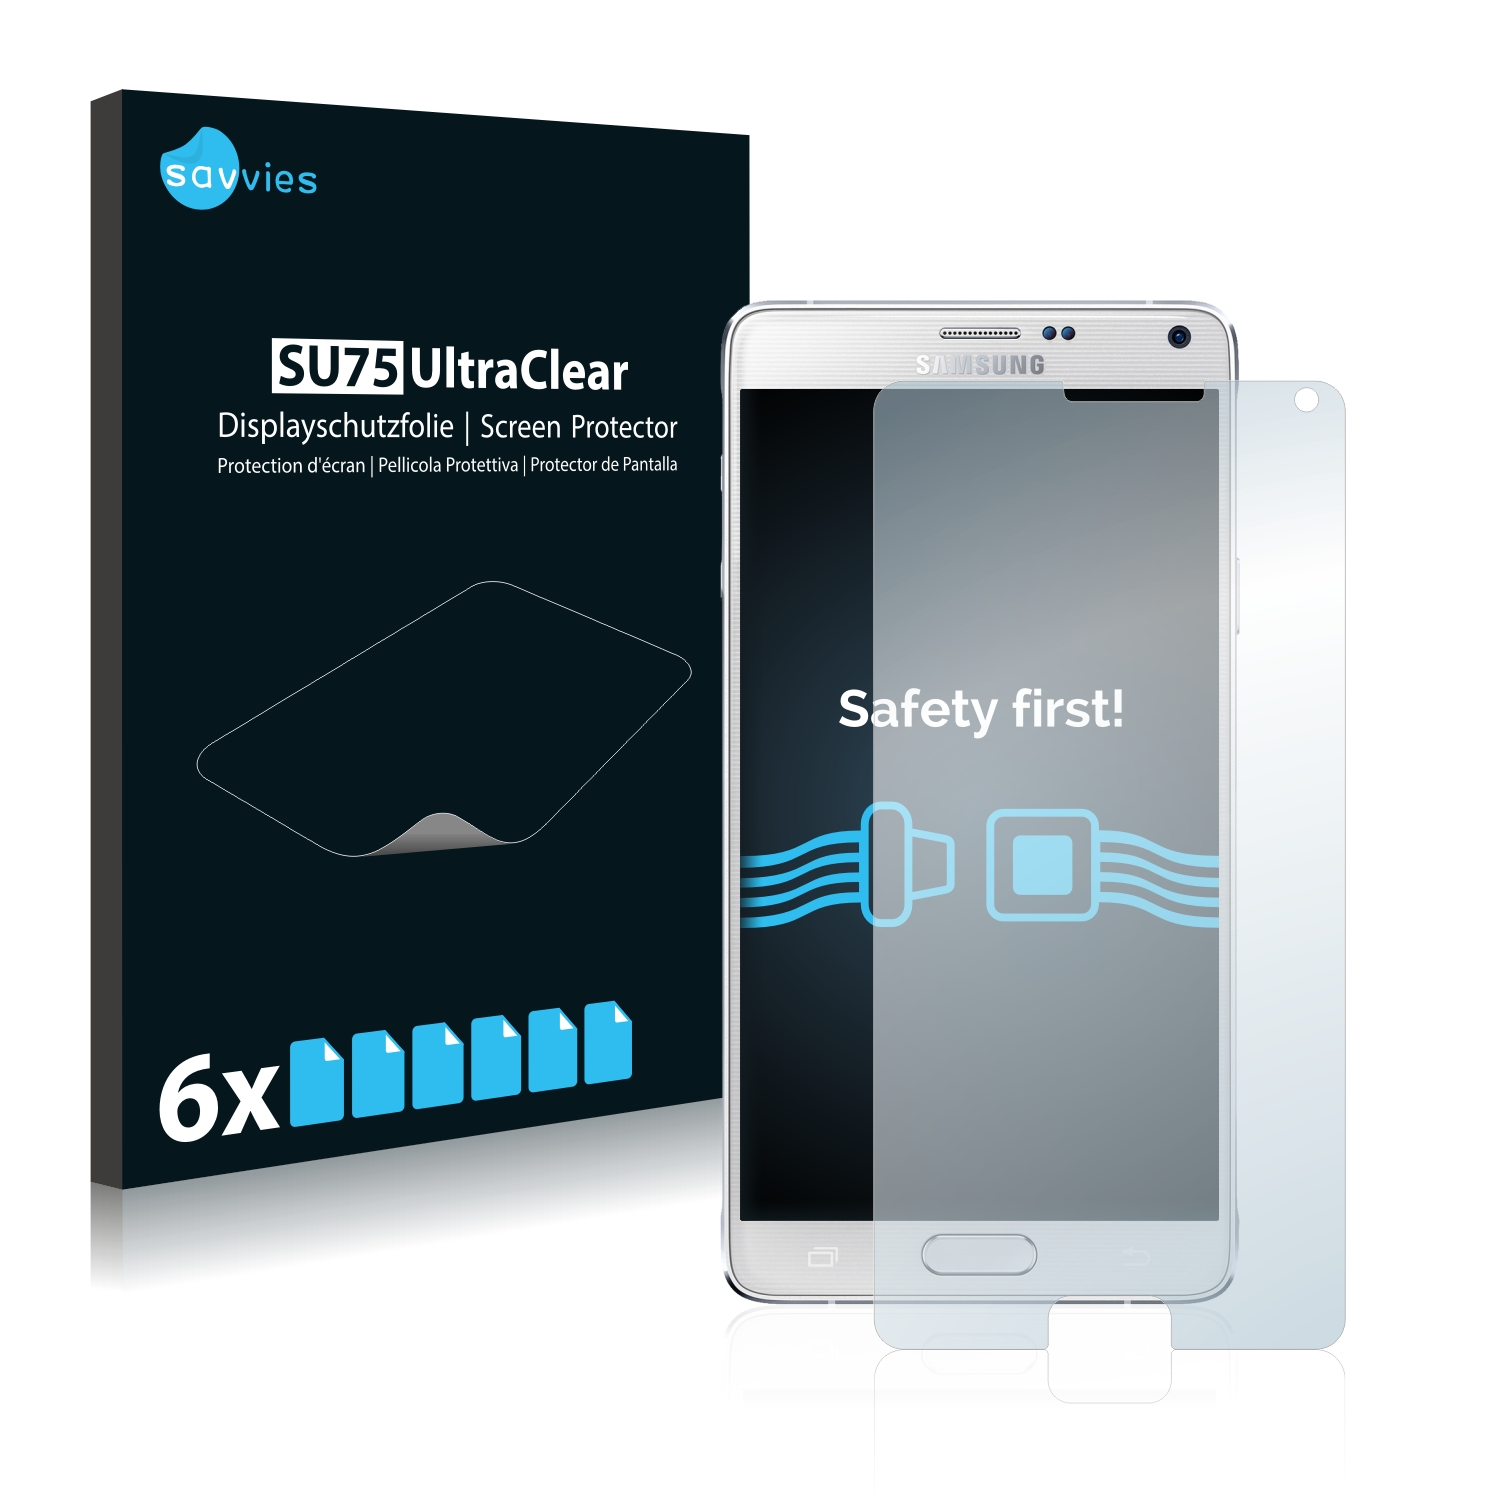 6x Savvies SU75 čirá ochranná fólie pro Samsung Galaxy Note 4 LTE-A